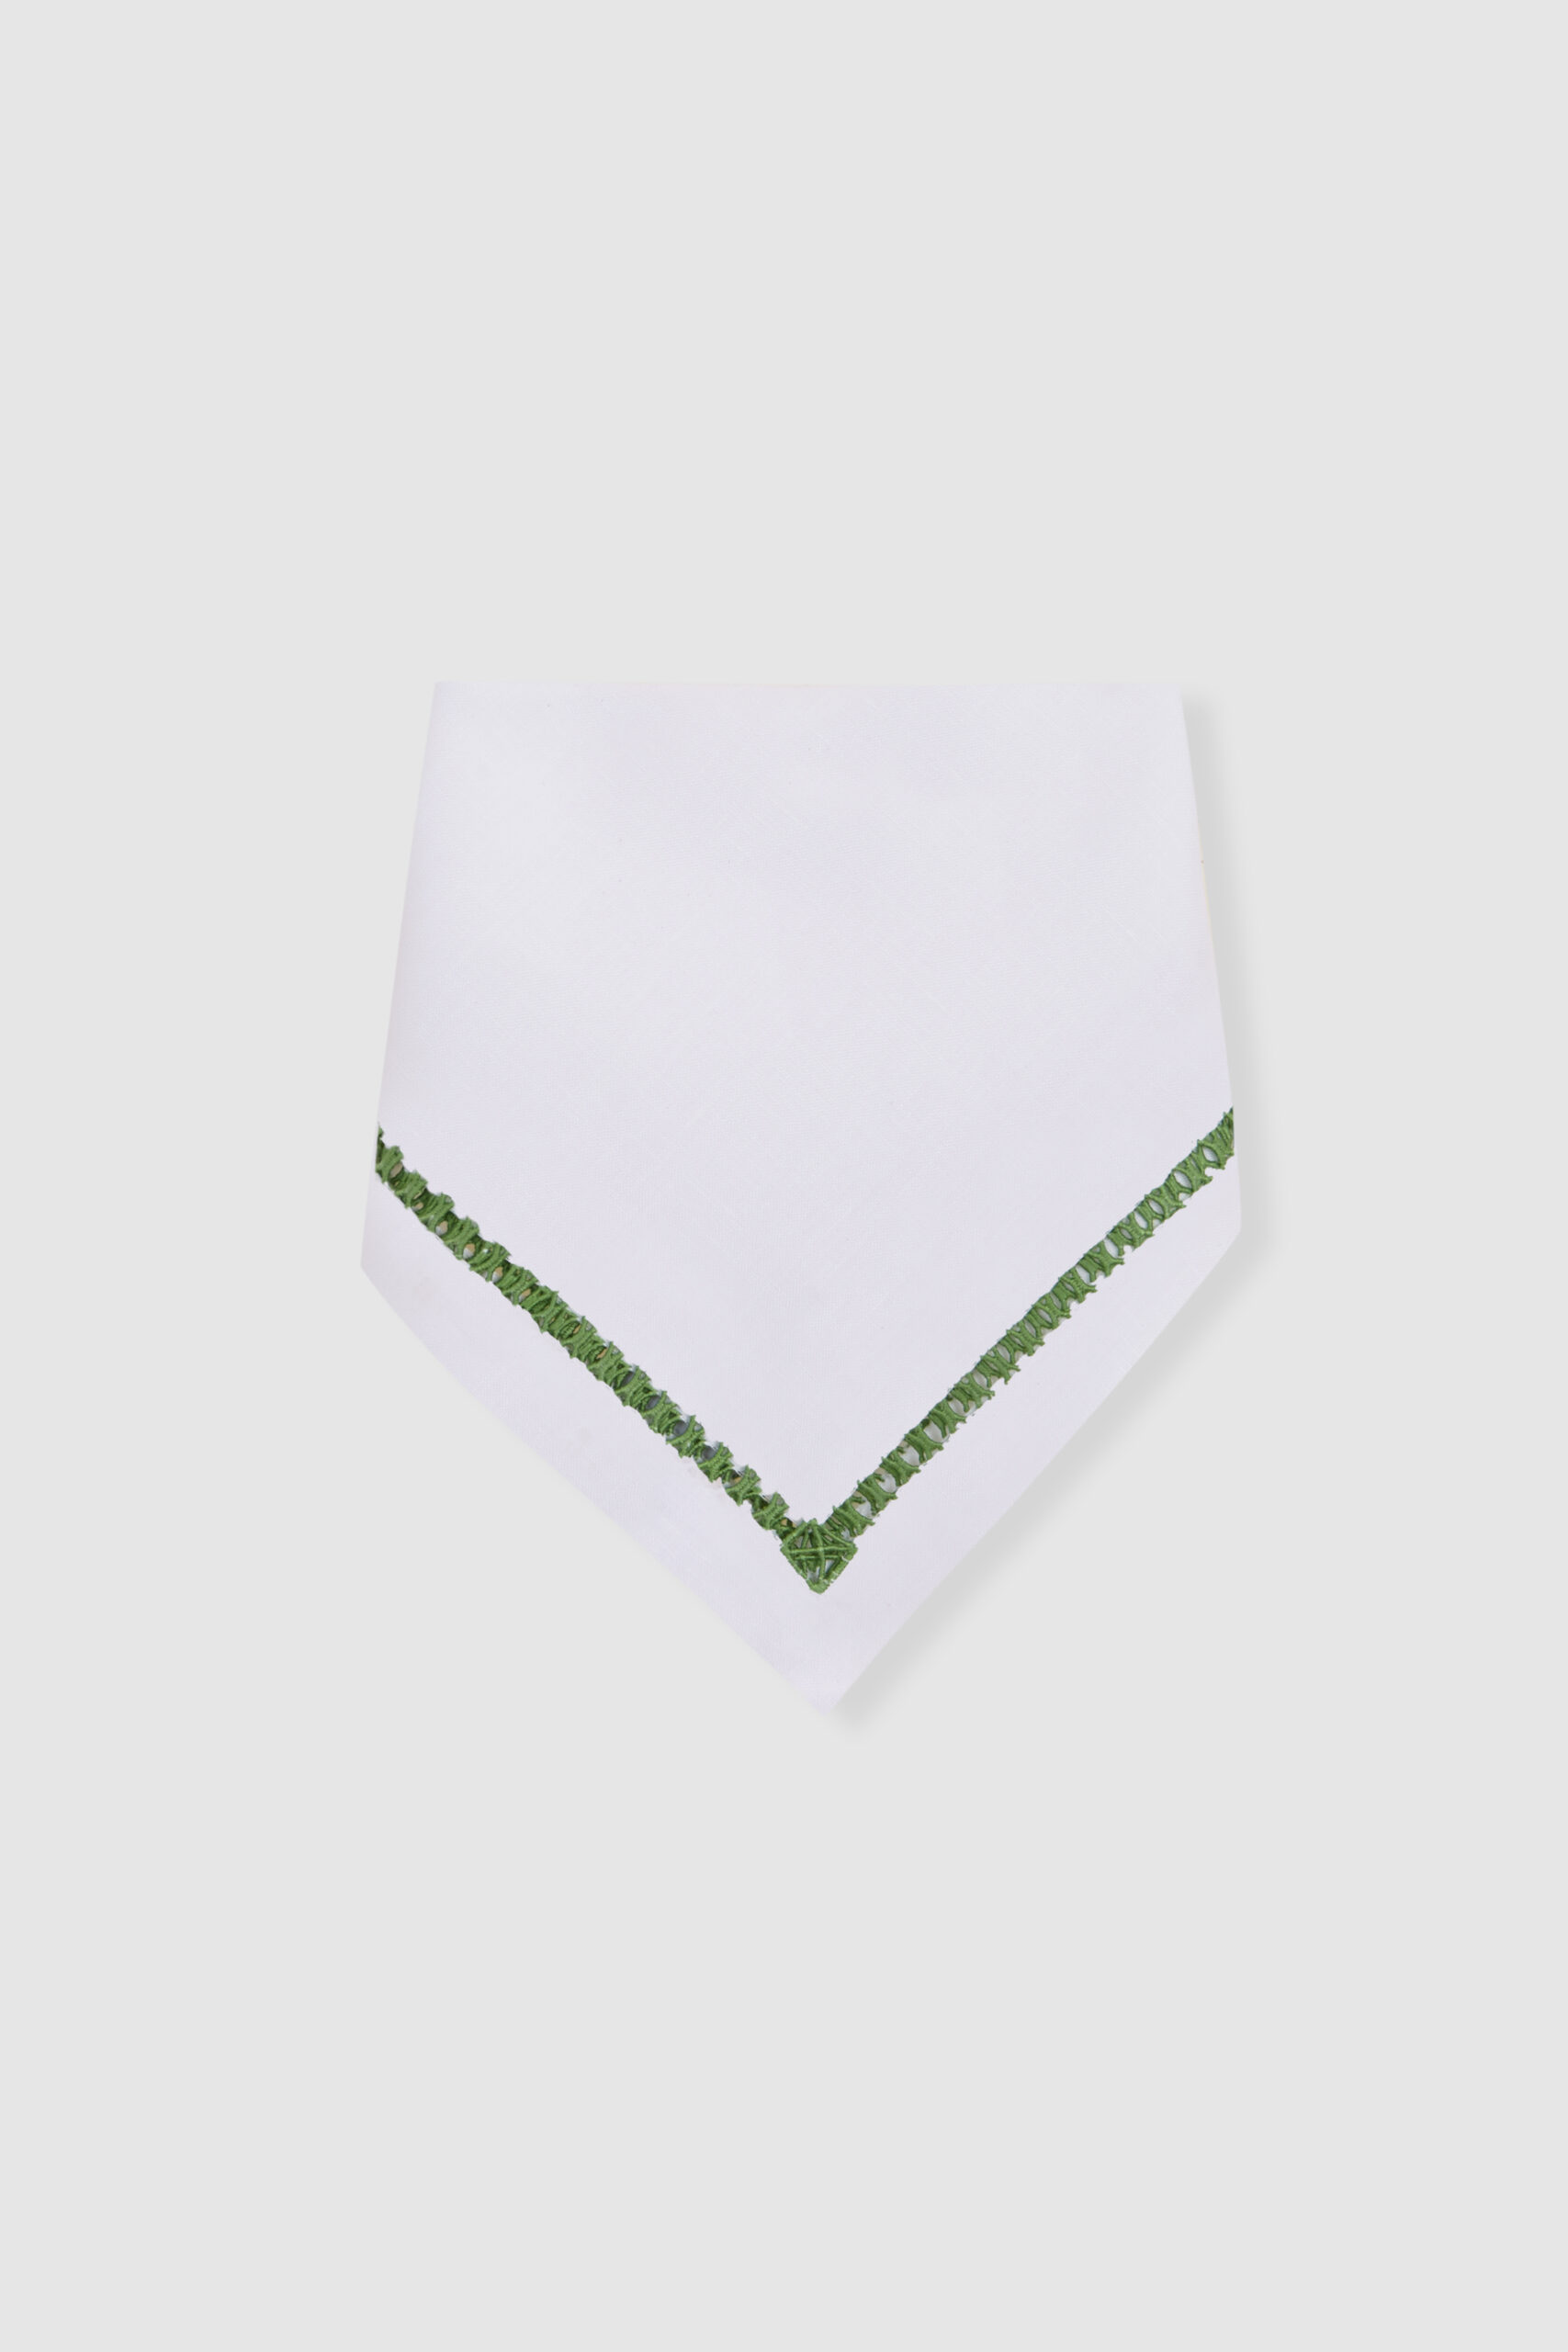 tokyo green linen napkin